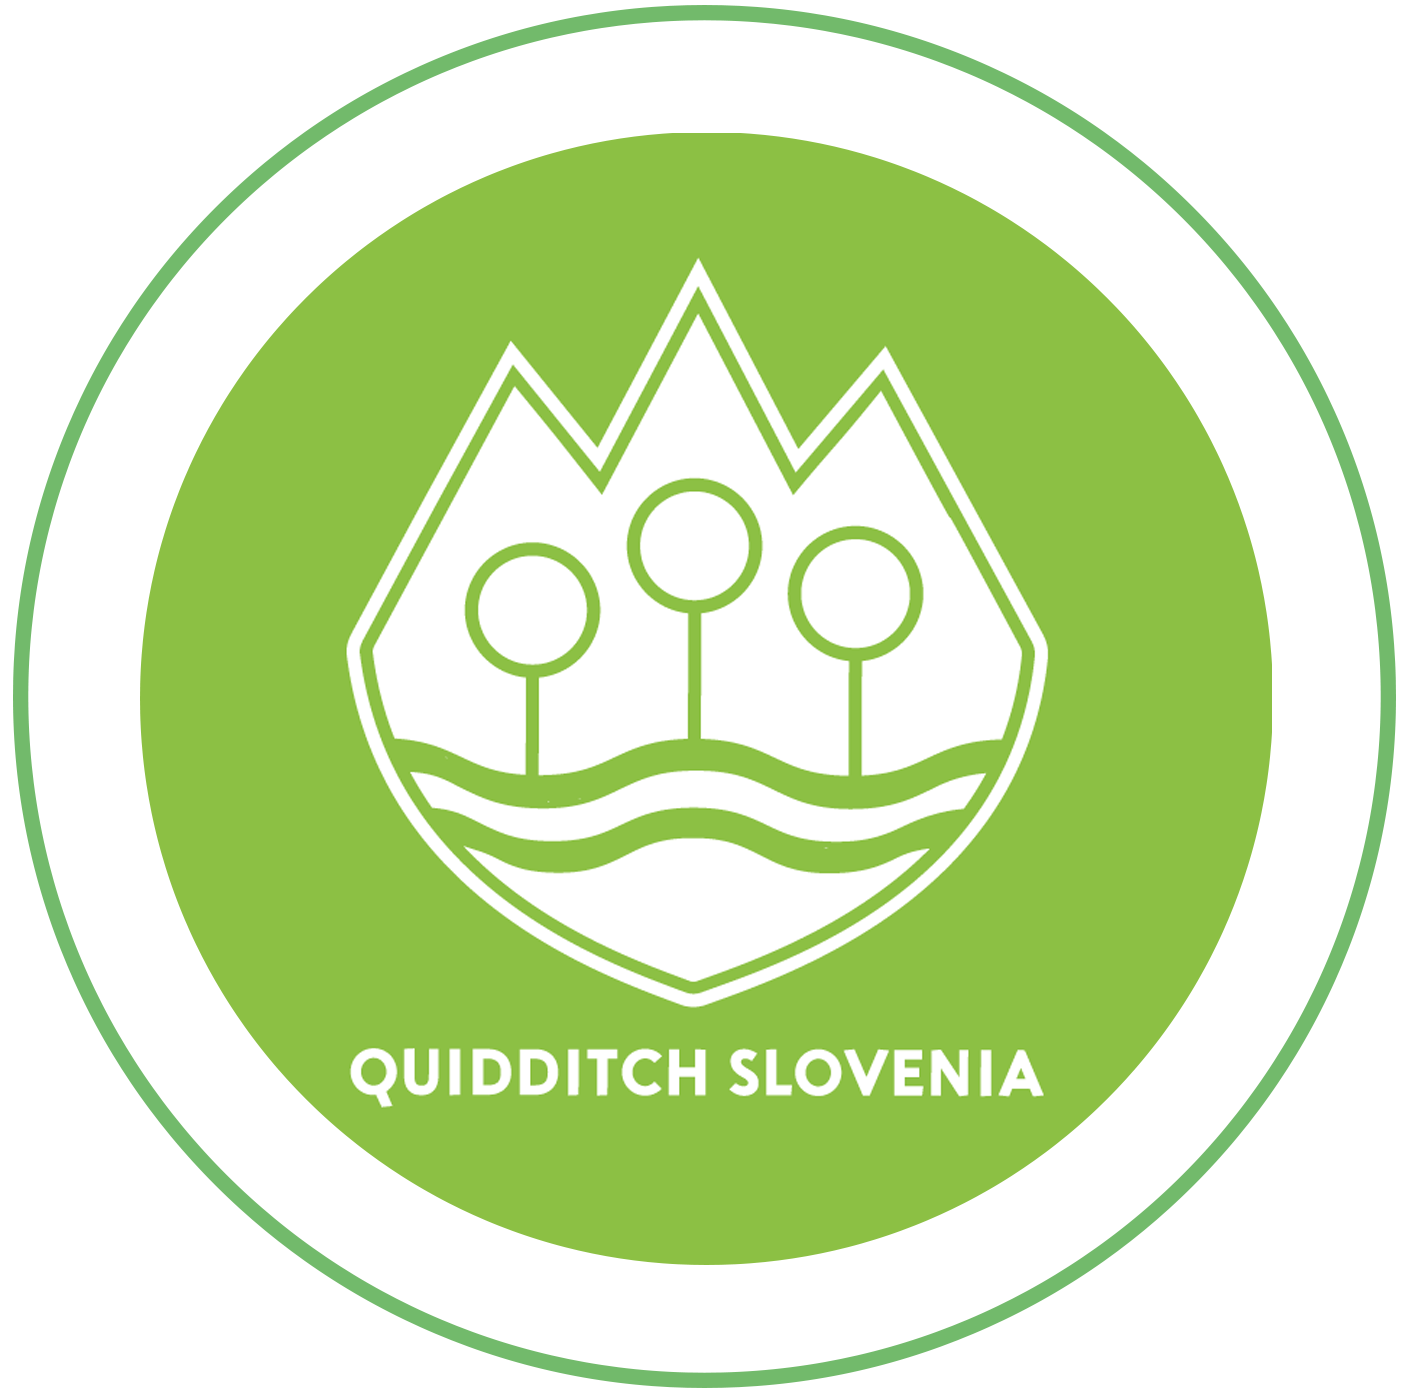 Slovenia Quadball logo